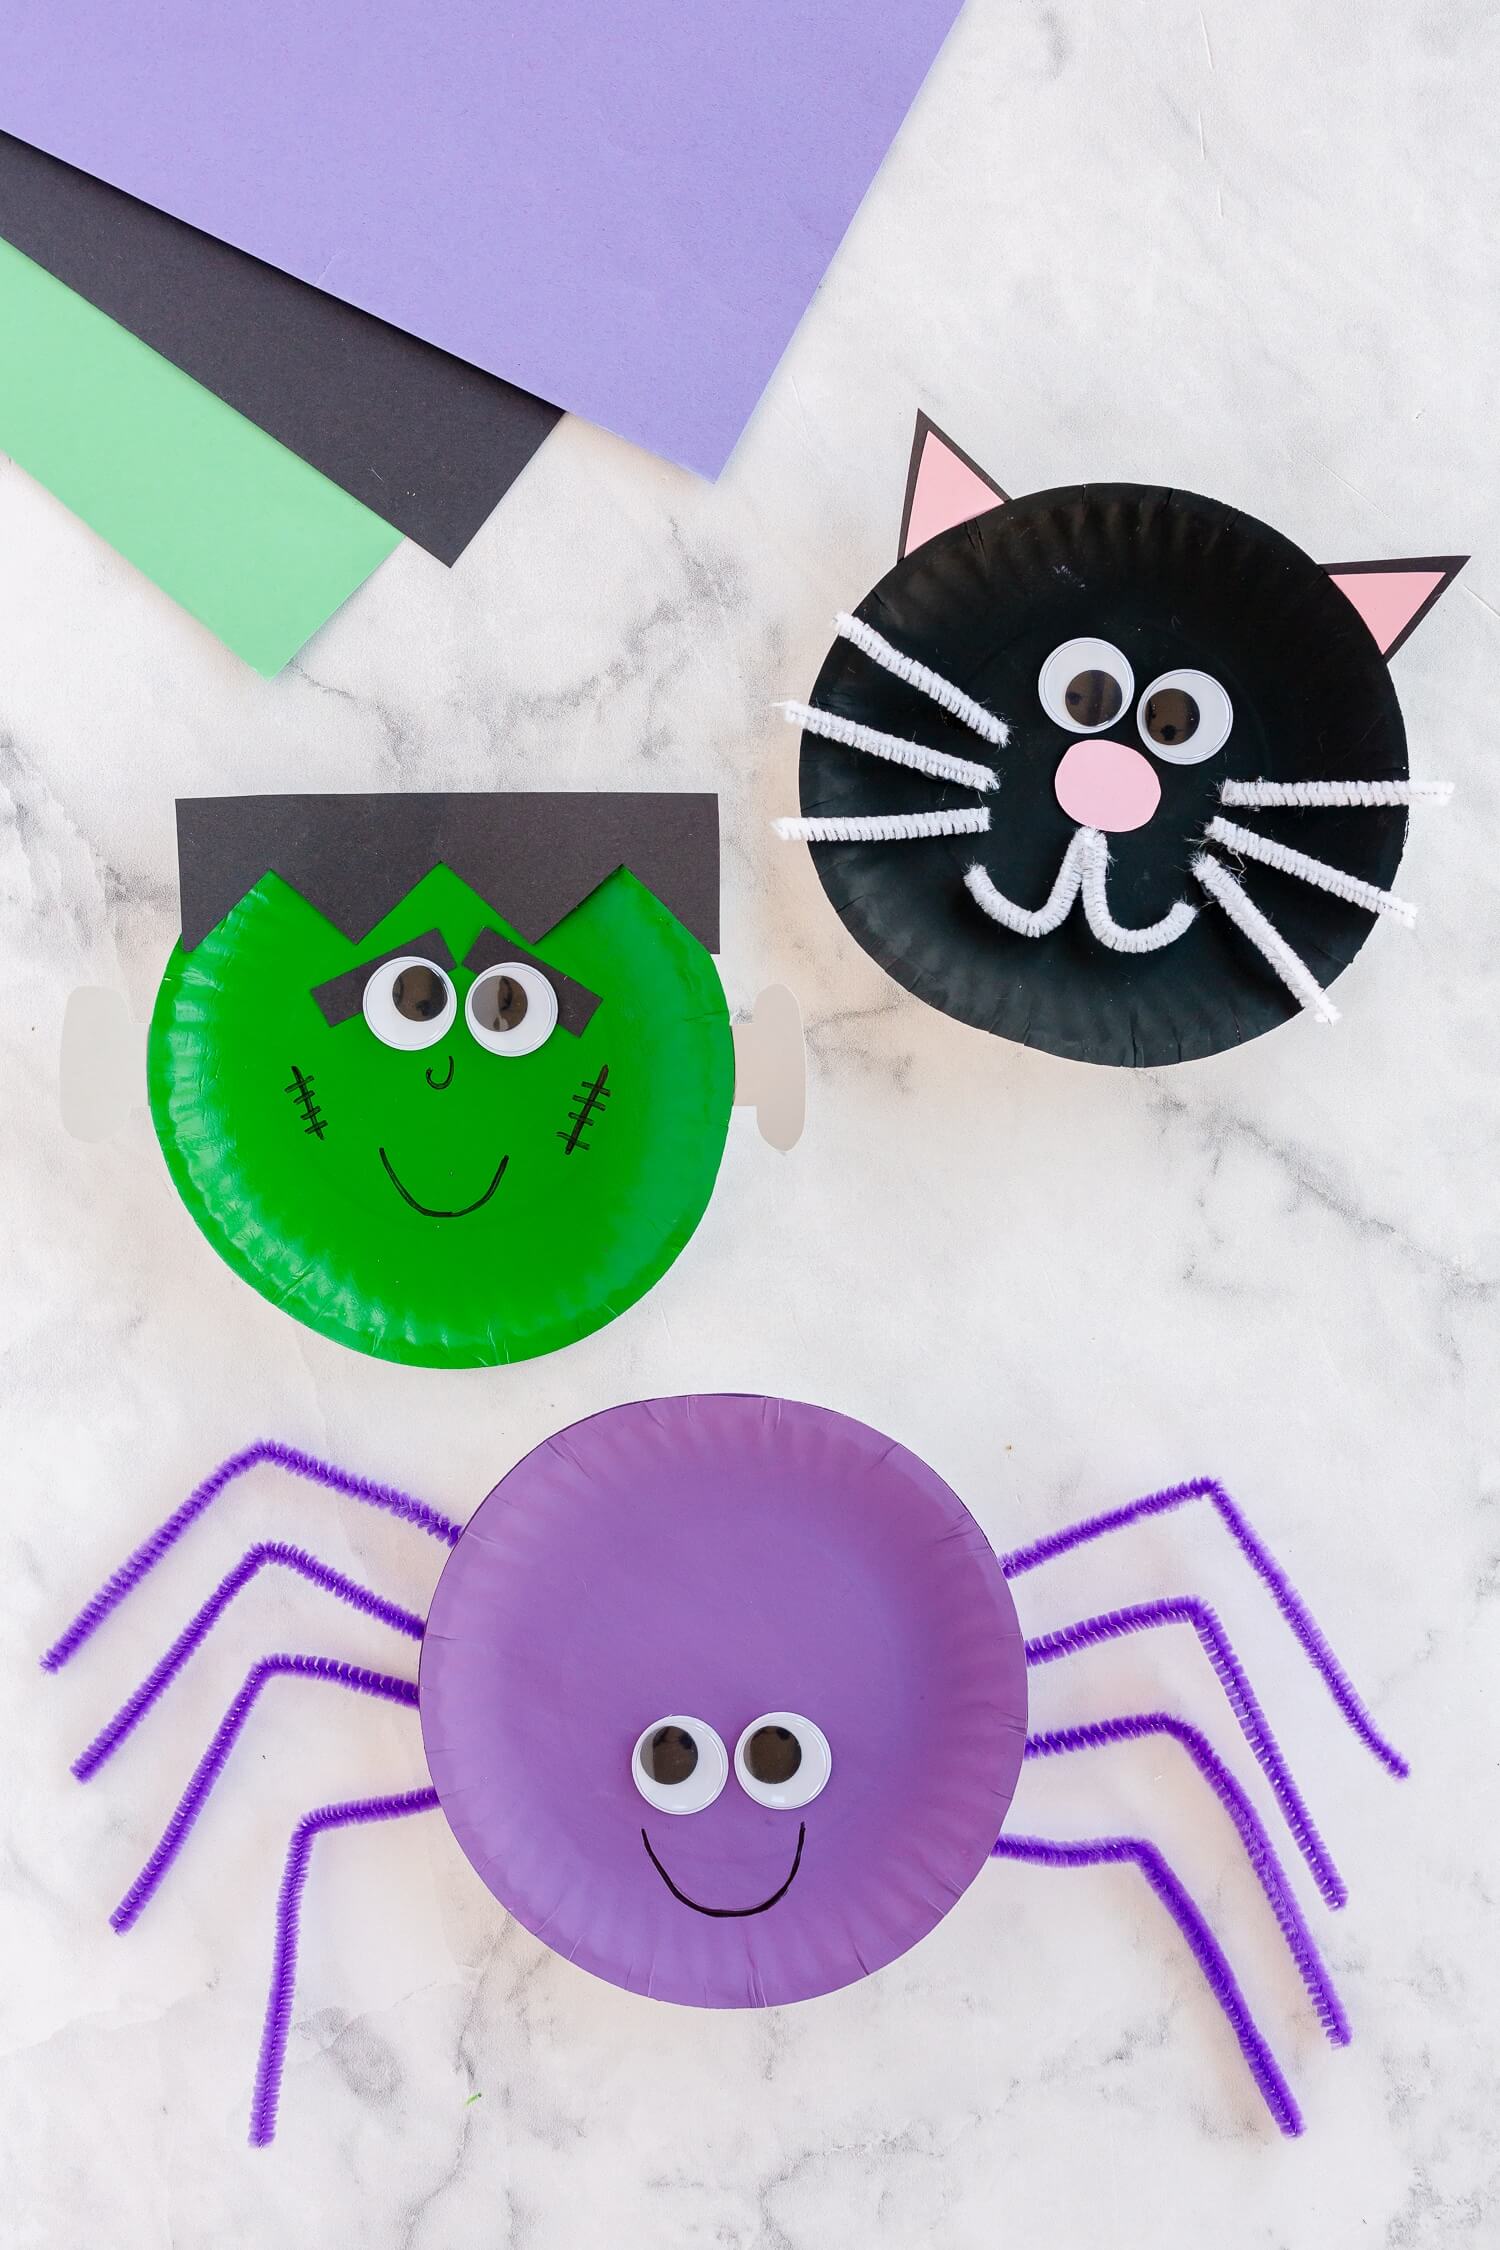 Black Cat, Spider & Frankenstein - Halloween Paper Plate Craft Activity For Kids - Crafting with Halloween paper plates is a great activity for preschoolers.